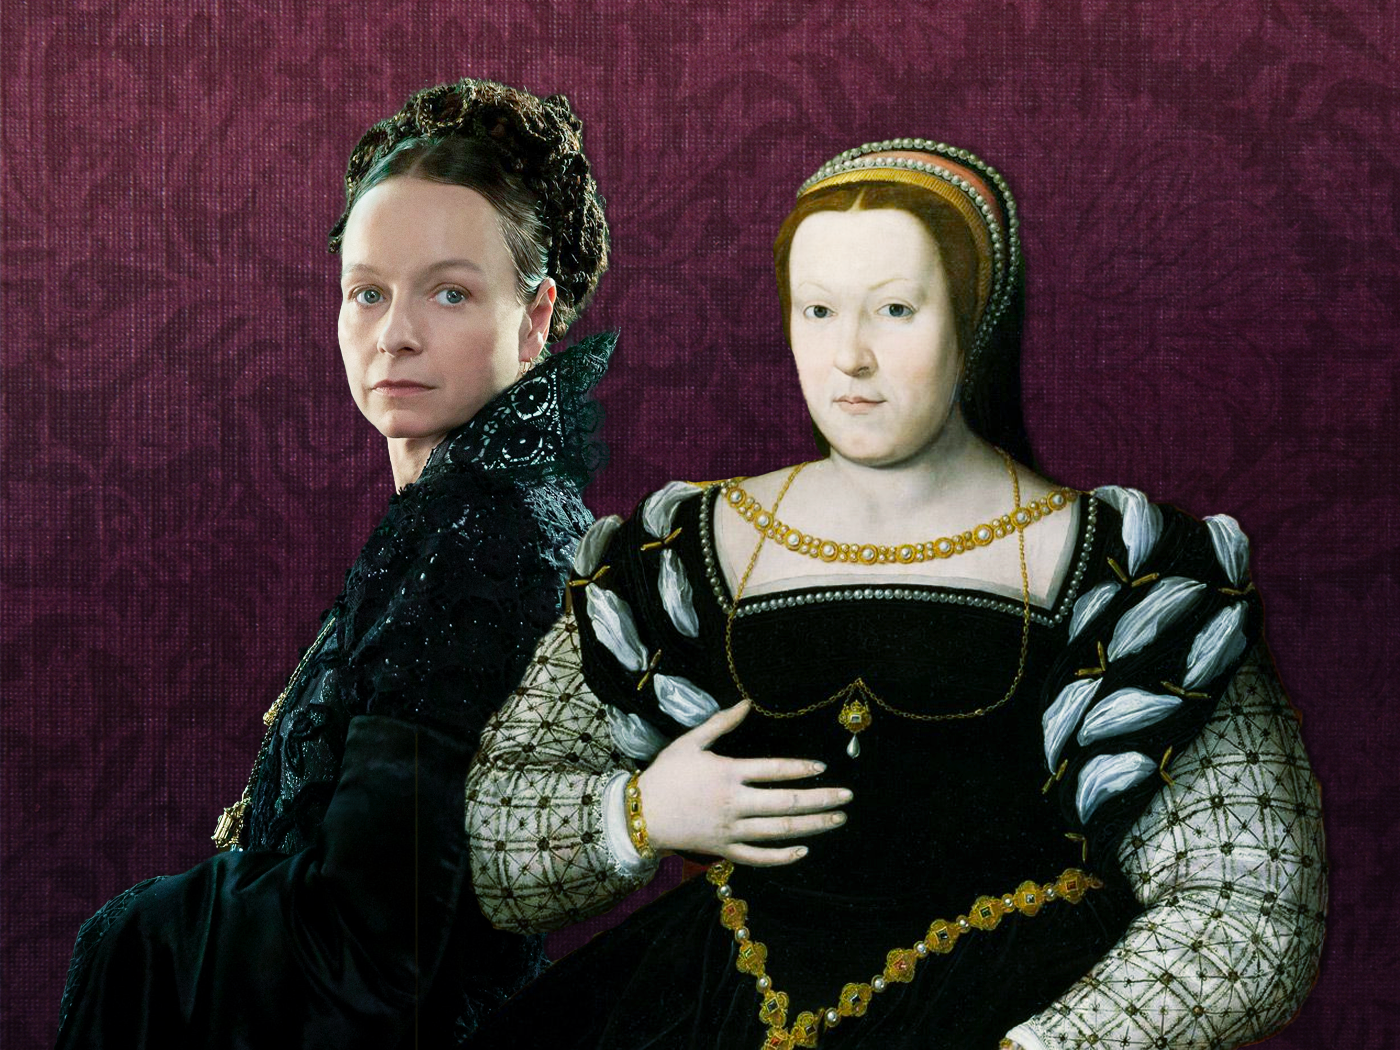 Illustration of Samantha Morton as Catherine de' Medici and the queen herself in a portrait by Santi di Tito